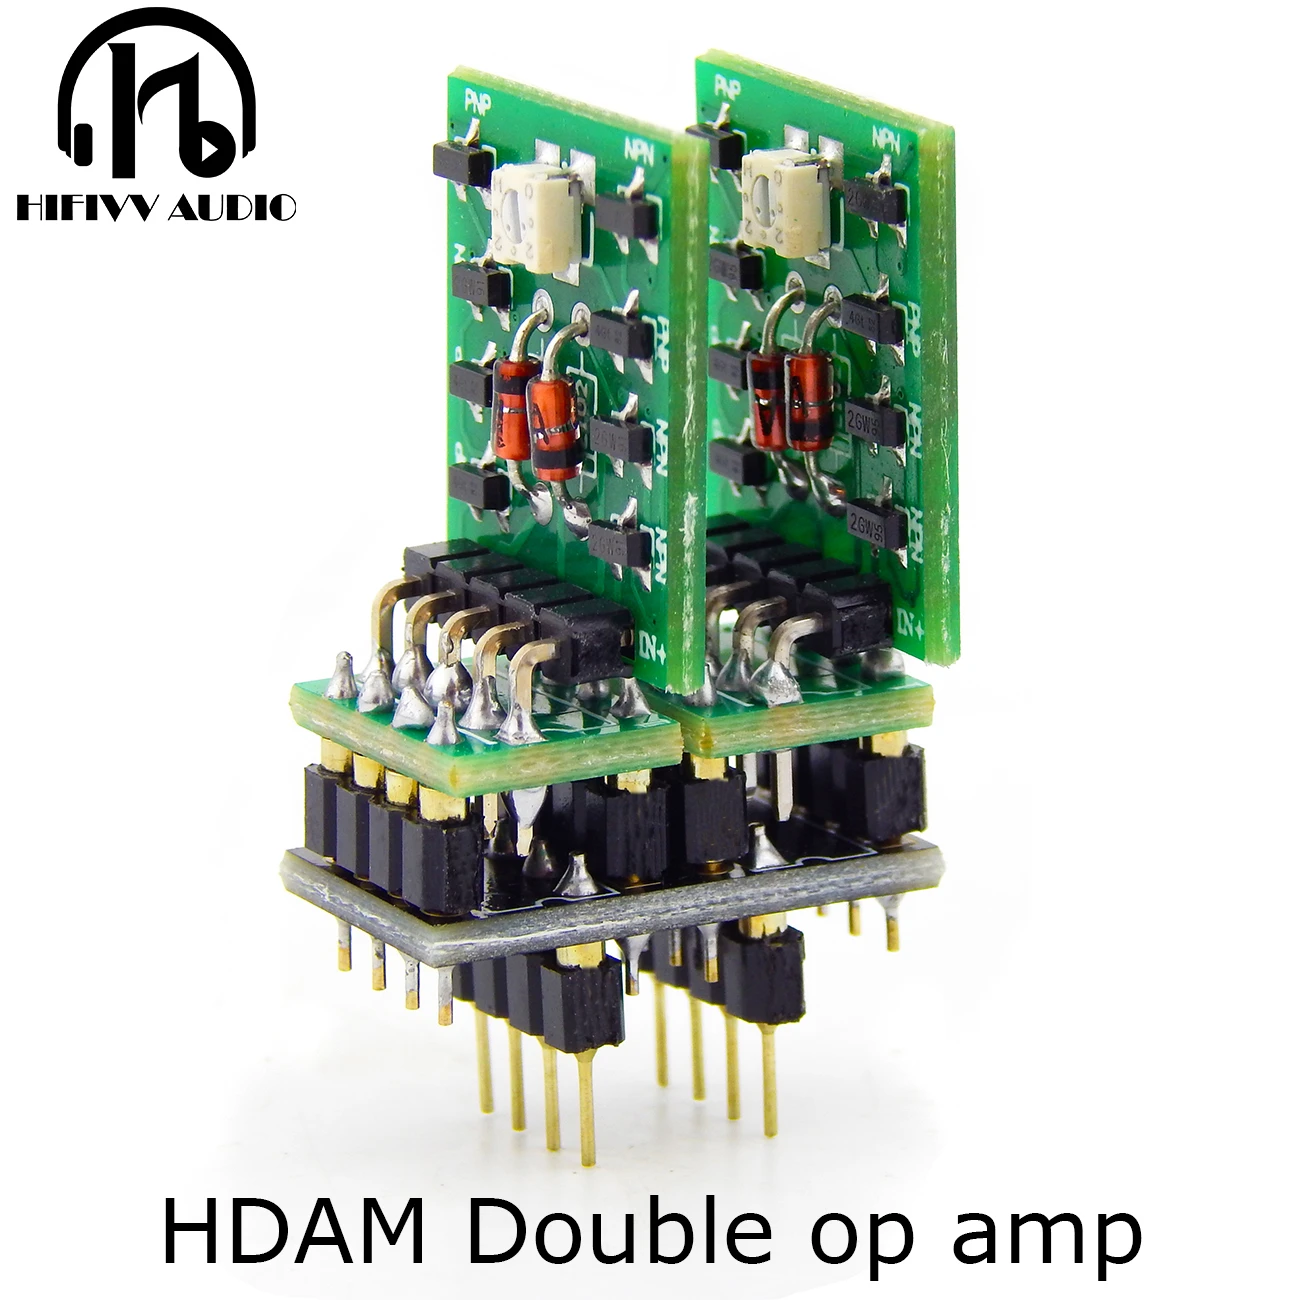 FET MOSFET Triode HDAM Double OP AMP For HiEND Audio Amplifier preamplifier speaker system Replace NE5532 LME49720 MUS02 OPA2604